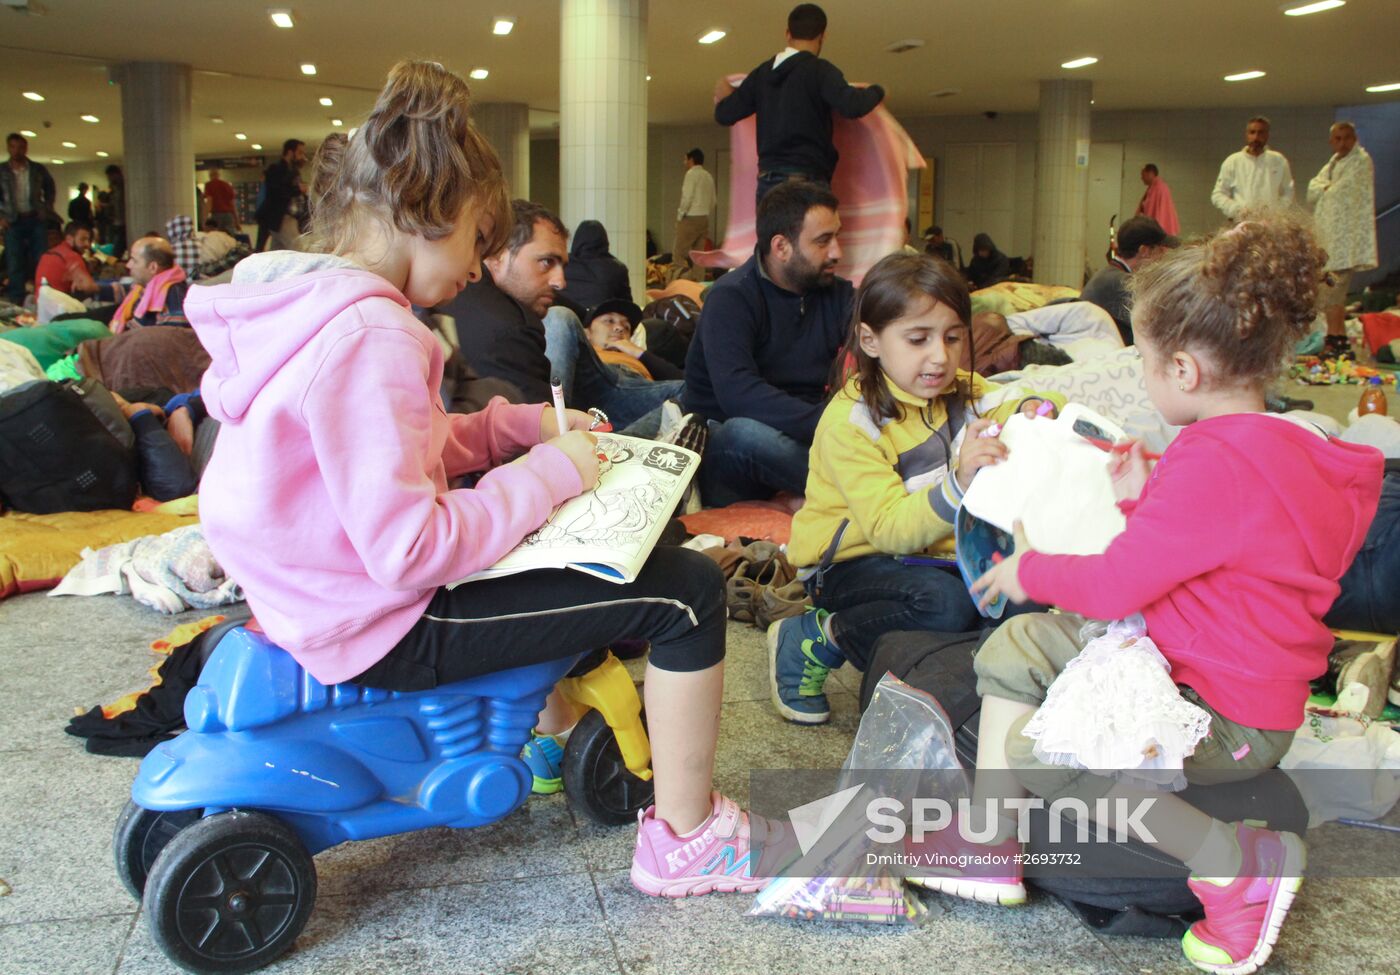 Middle Eastern refugees at Budapest Keleti station